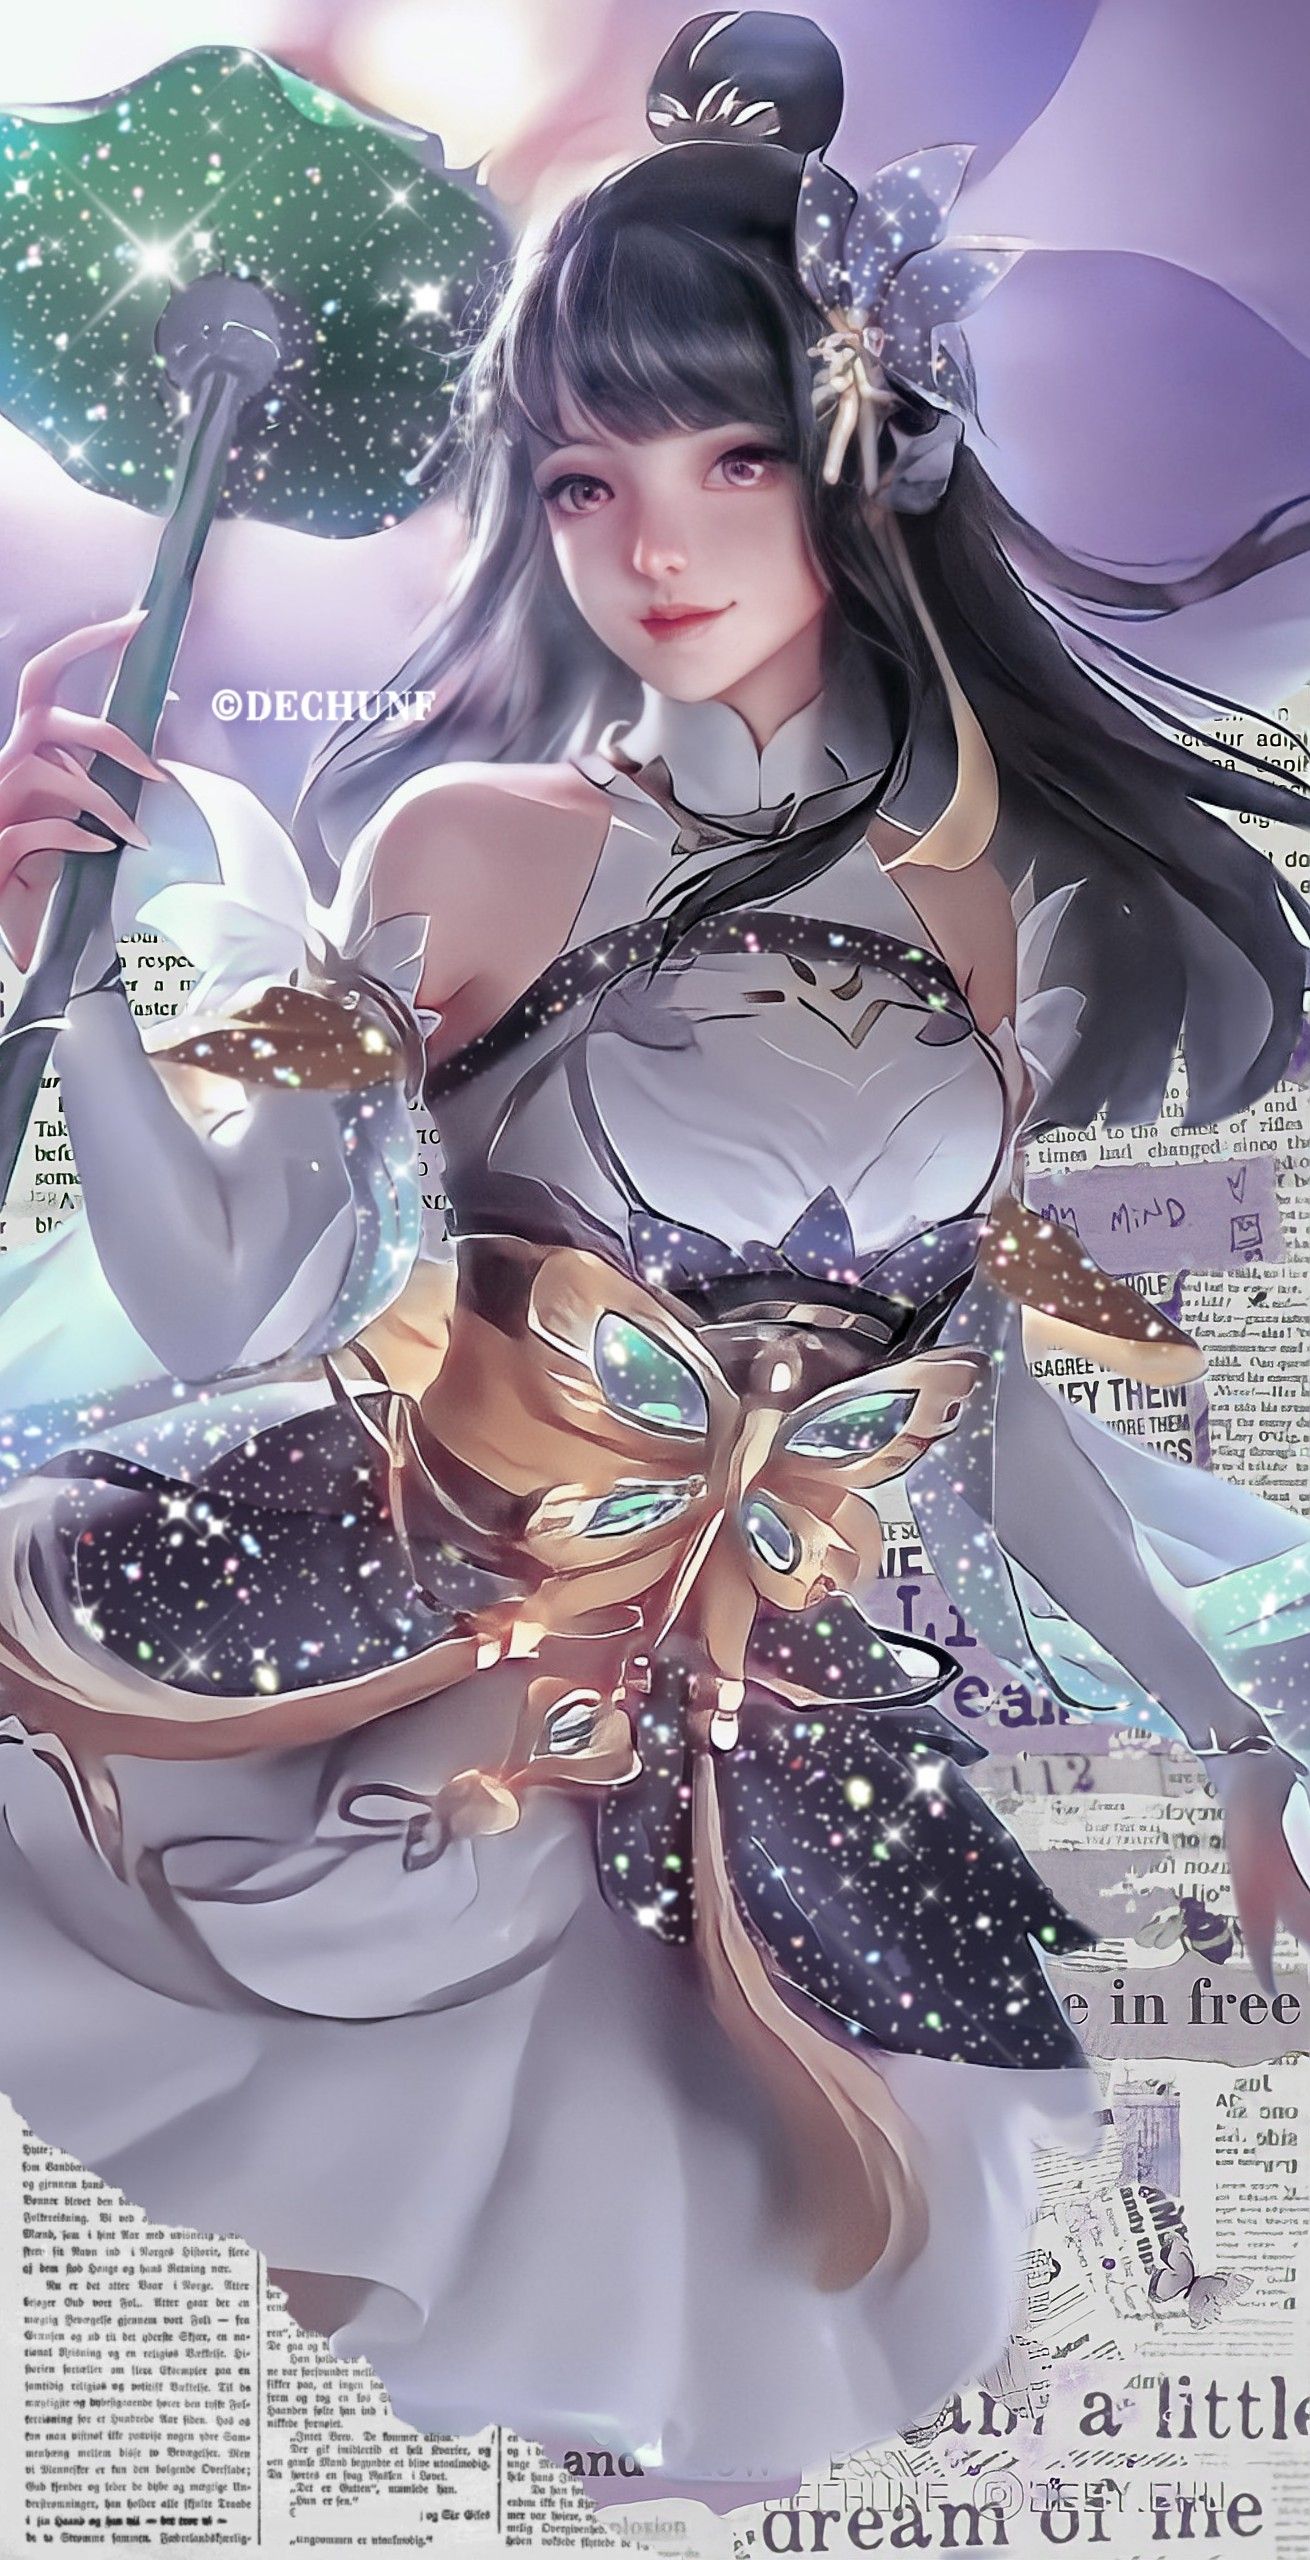 1080p Anime Wallpaper Latest Wallpaper Kagura Water Lily Starlight MLBB Aesthetic Fantasy Art Women